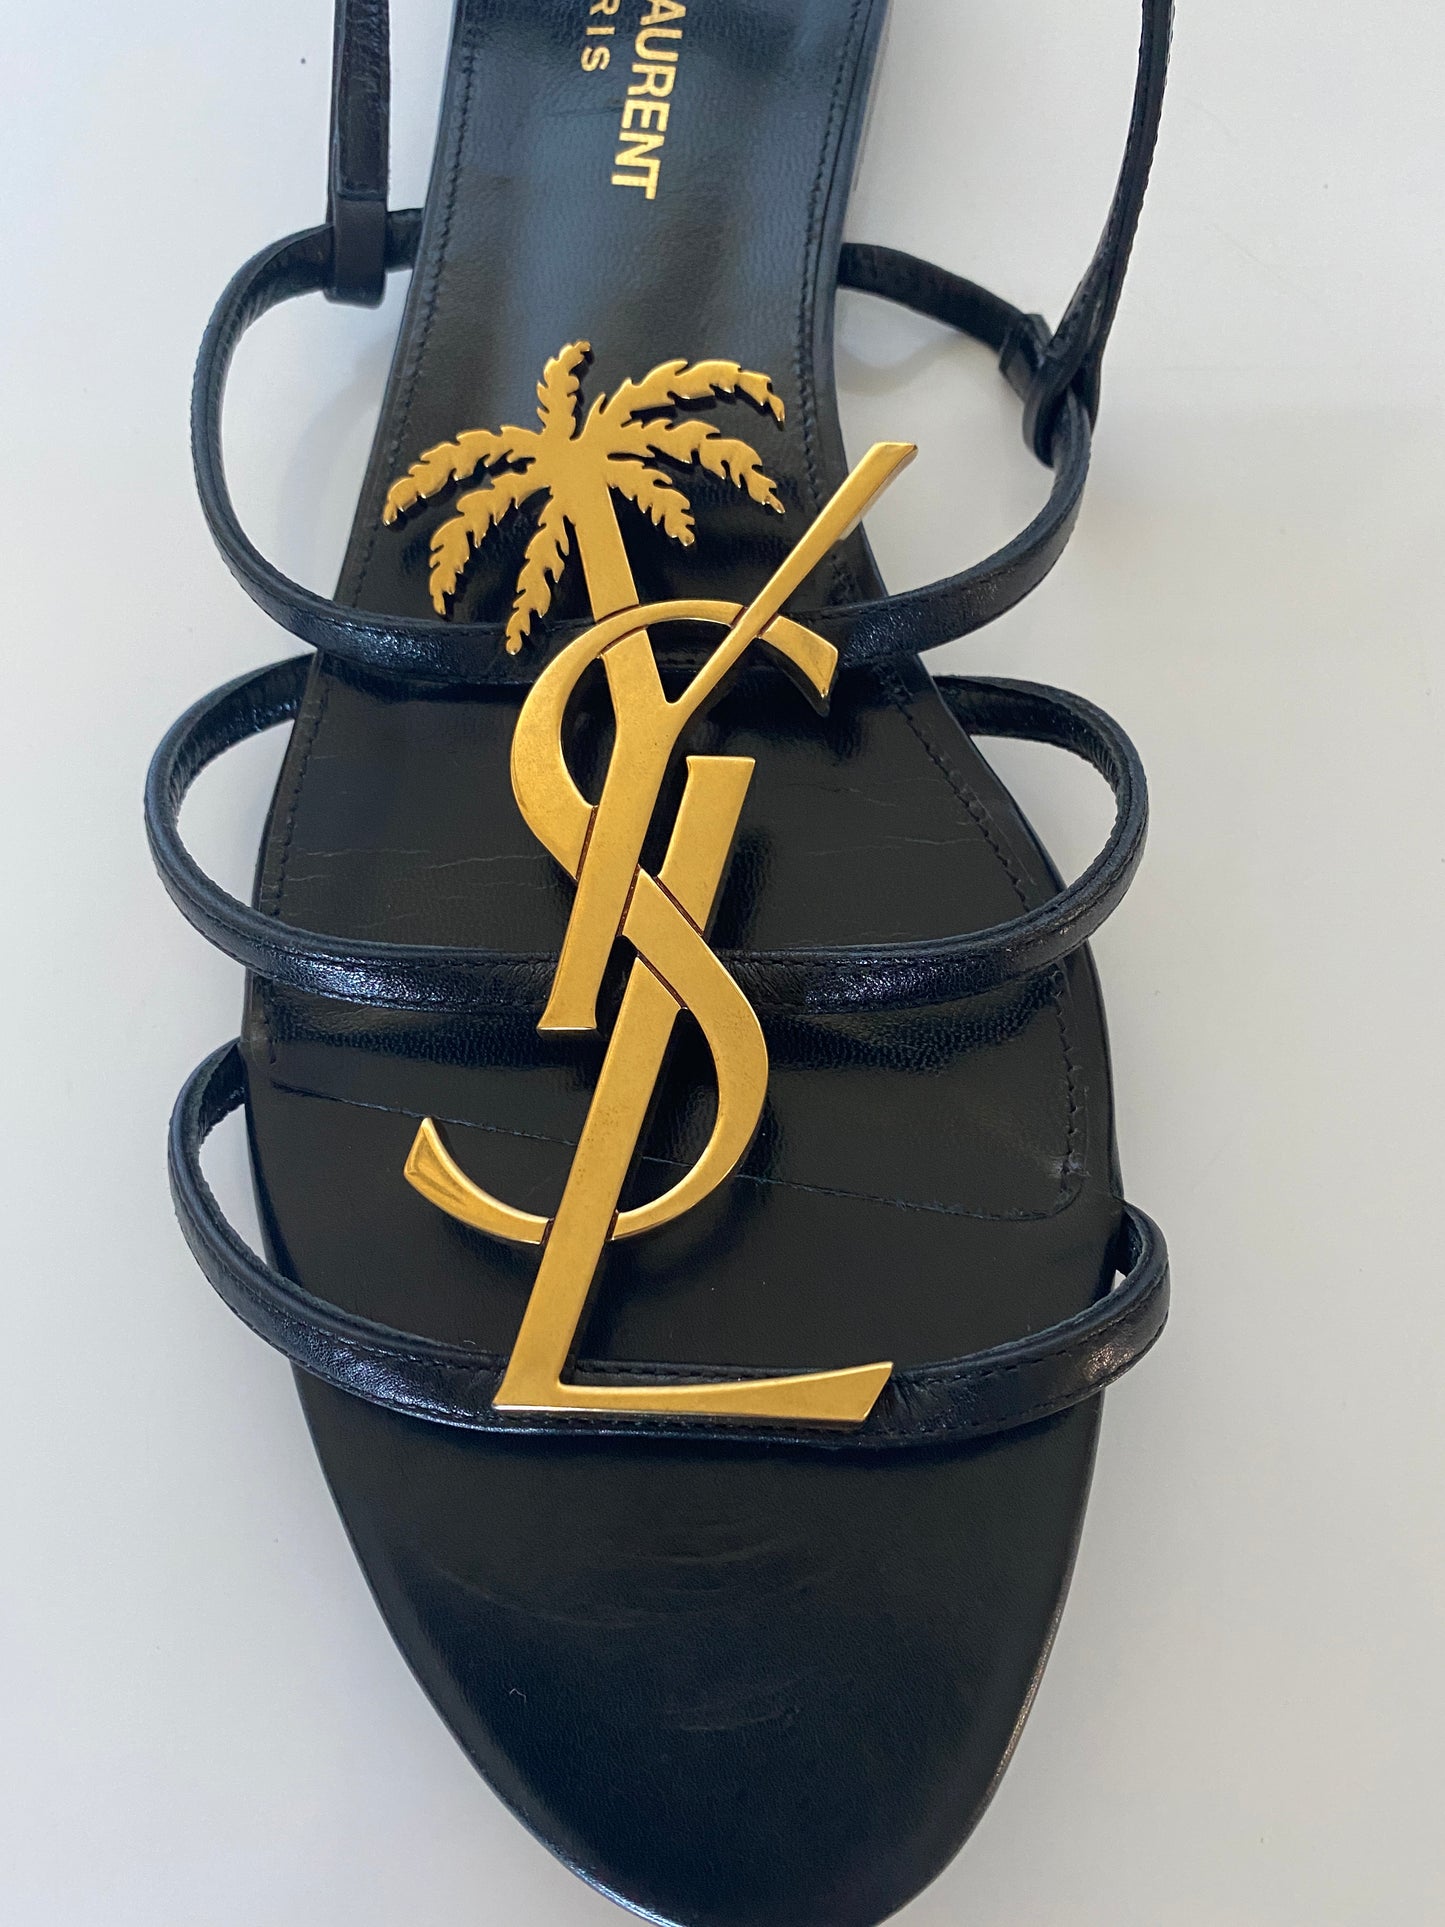 YSL palm monogram black leather sandals size 39.5 6.5